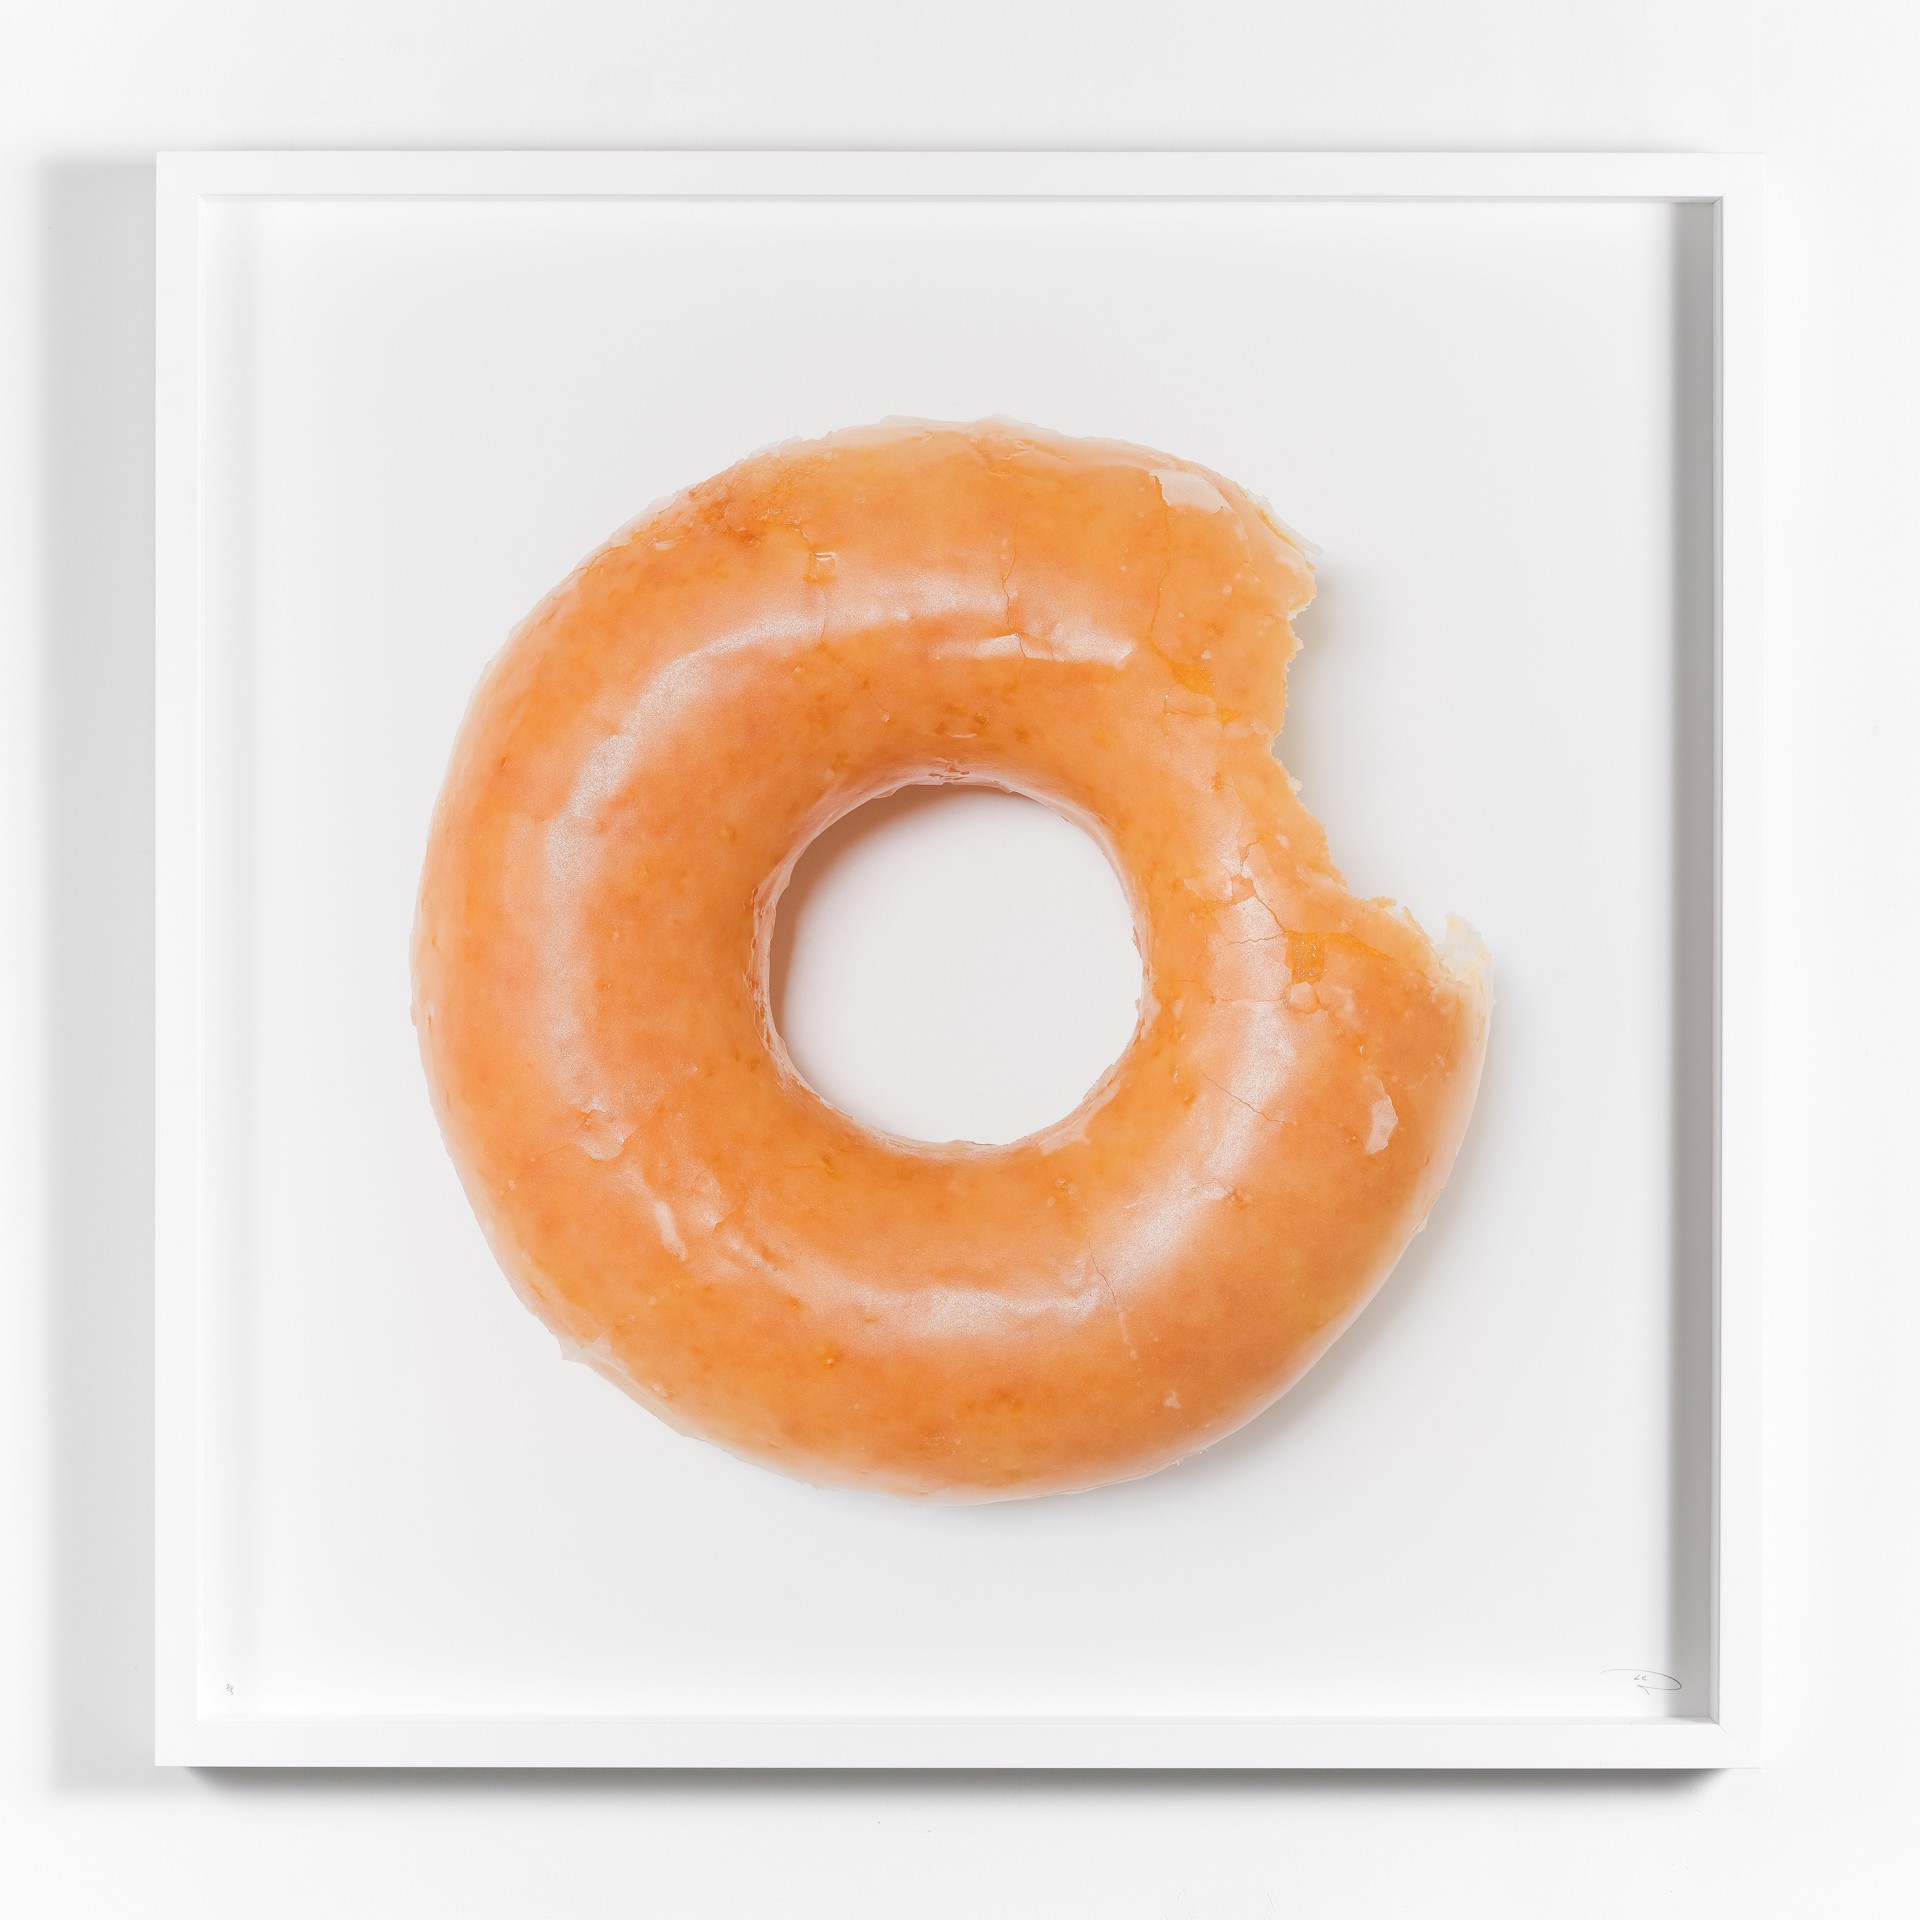 Glazed Donut by Peter Andrew Lusztyk / Refined Sugar